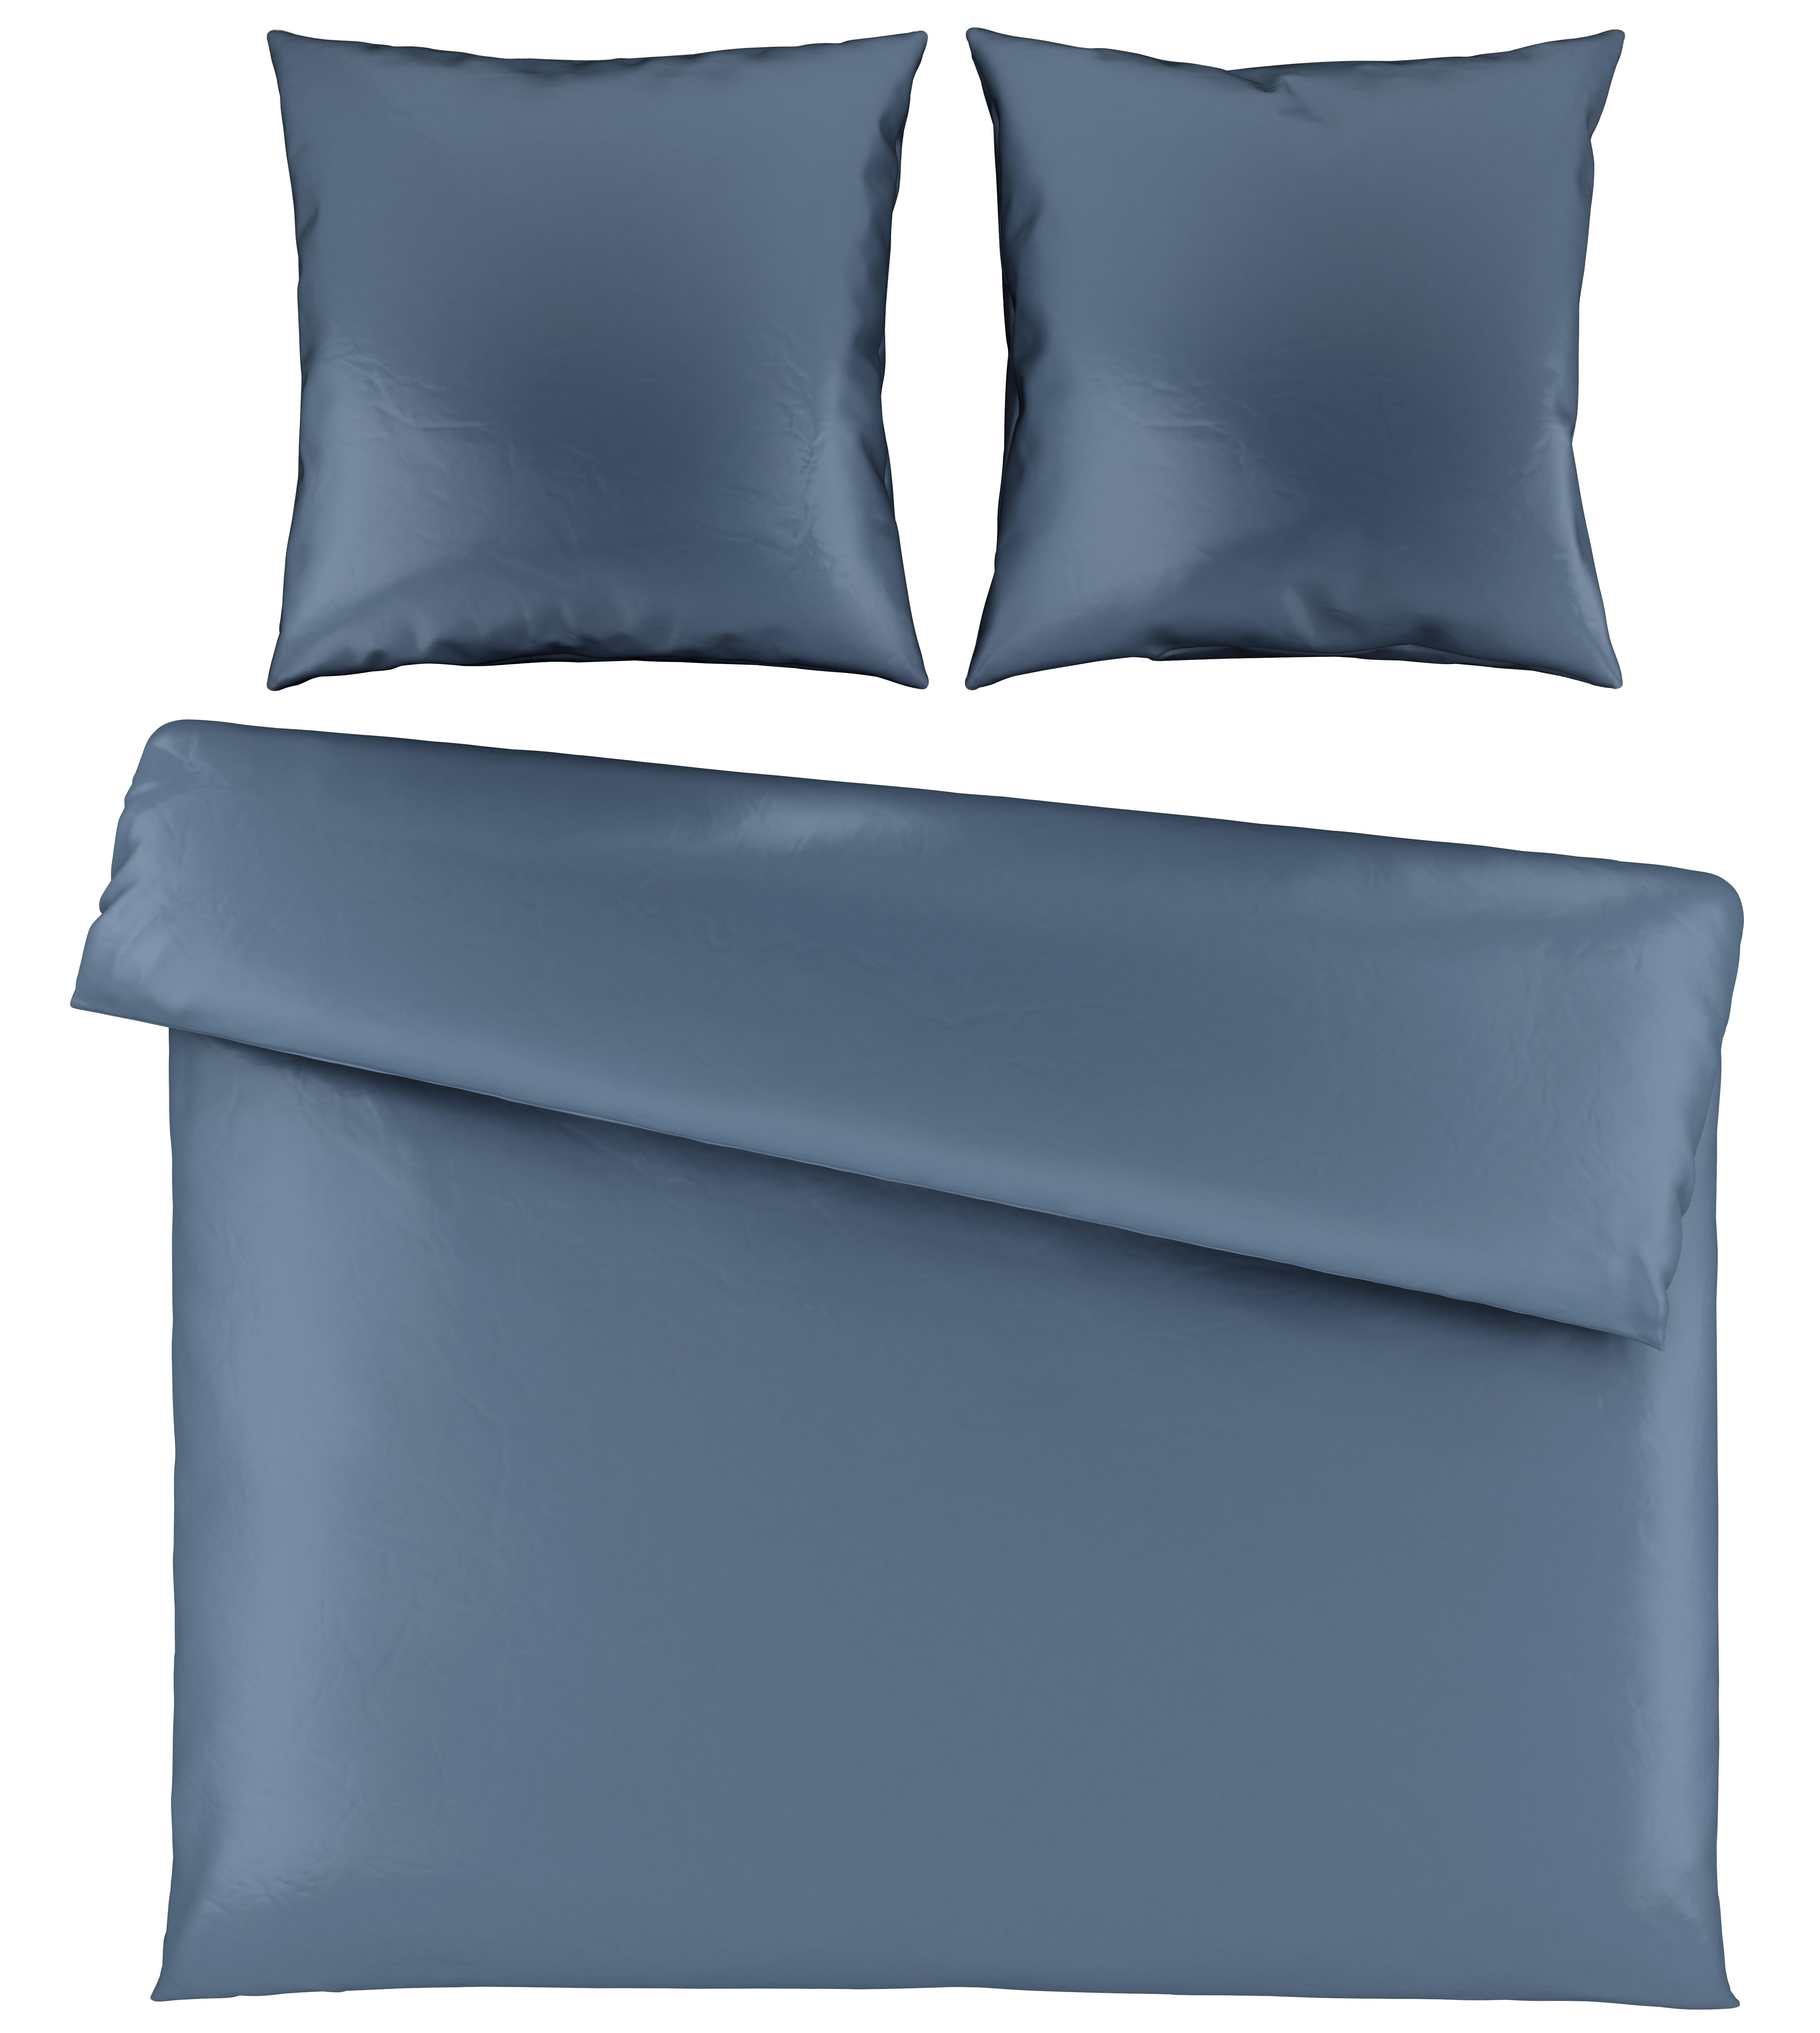 Bettwäsche Alex Uni XXL ca. 200x220cm - Blau, MODERN, Textil (200/220cm) - Premium Living